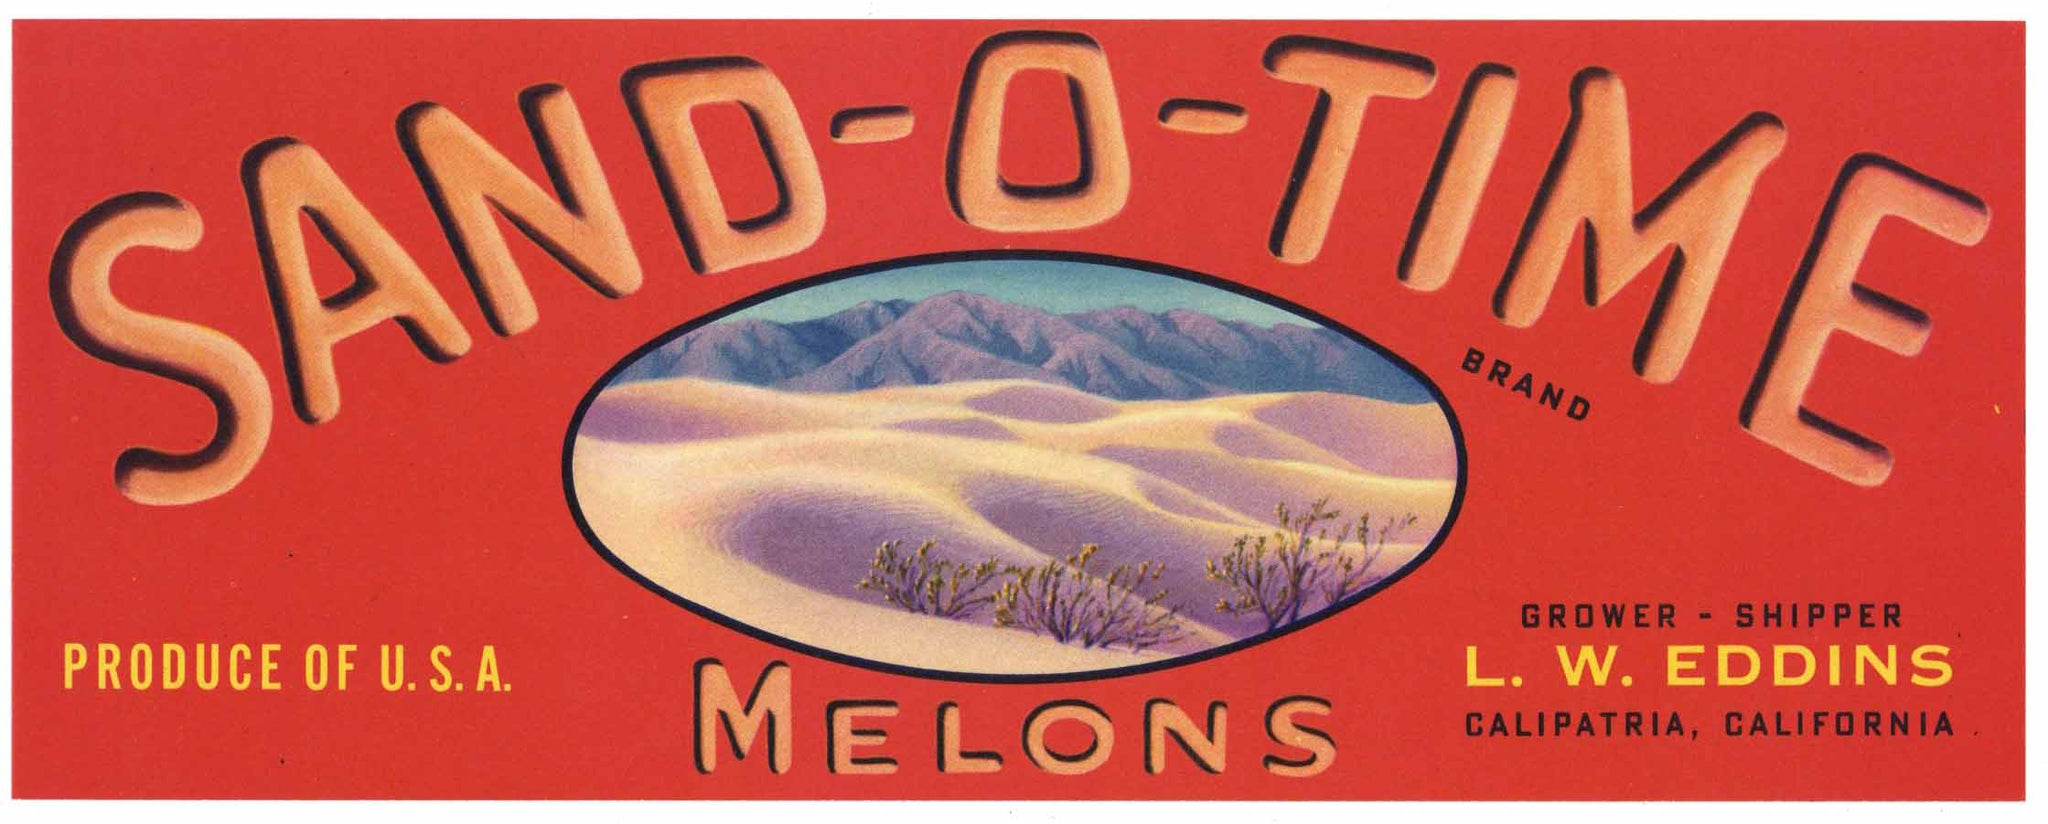 Sand-O-Time Brand Vintage Calipatria California Melon Crate Label